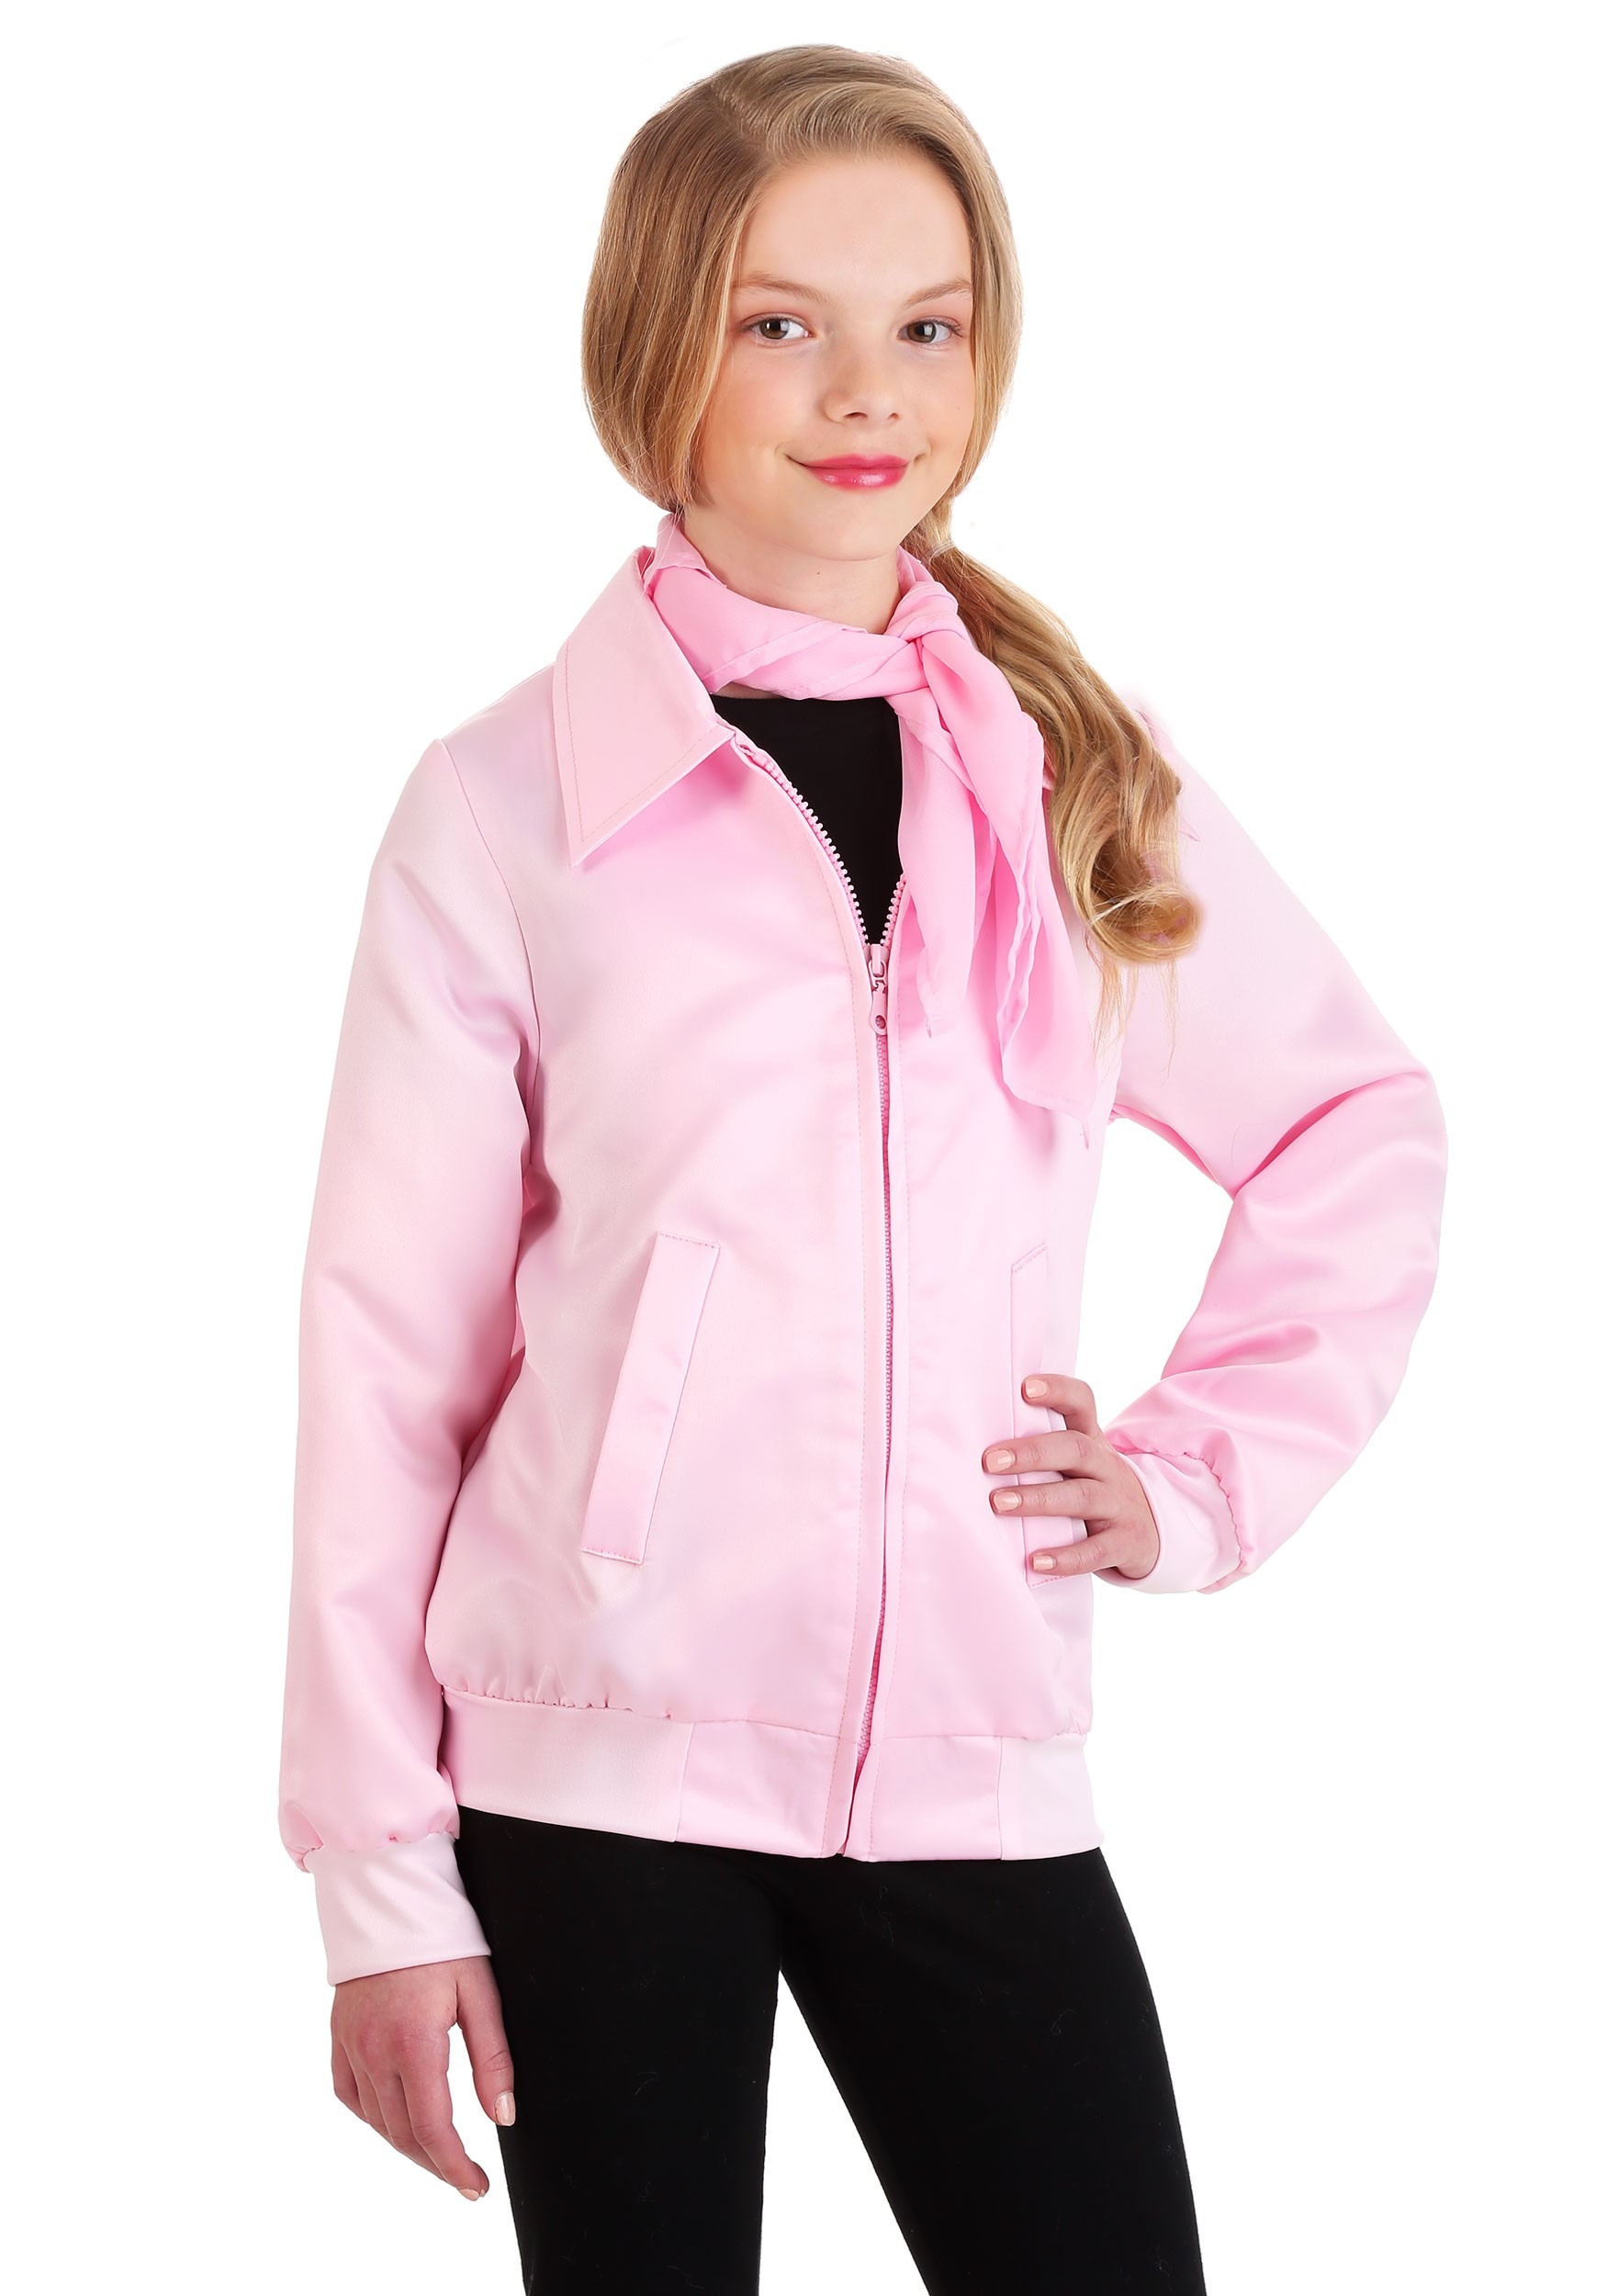 Photos - Fancy Dress FUN Costumes Grease Pink Ladies Costume Jacket for Girls Black/Pink